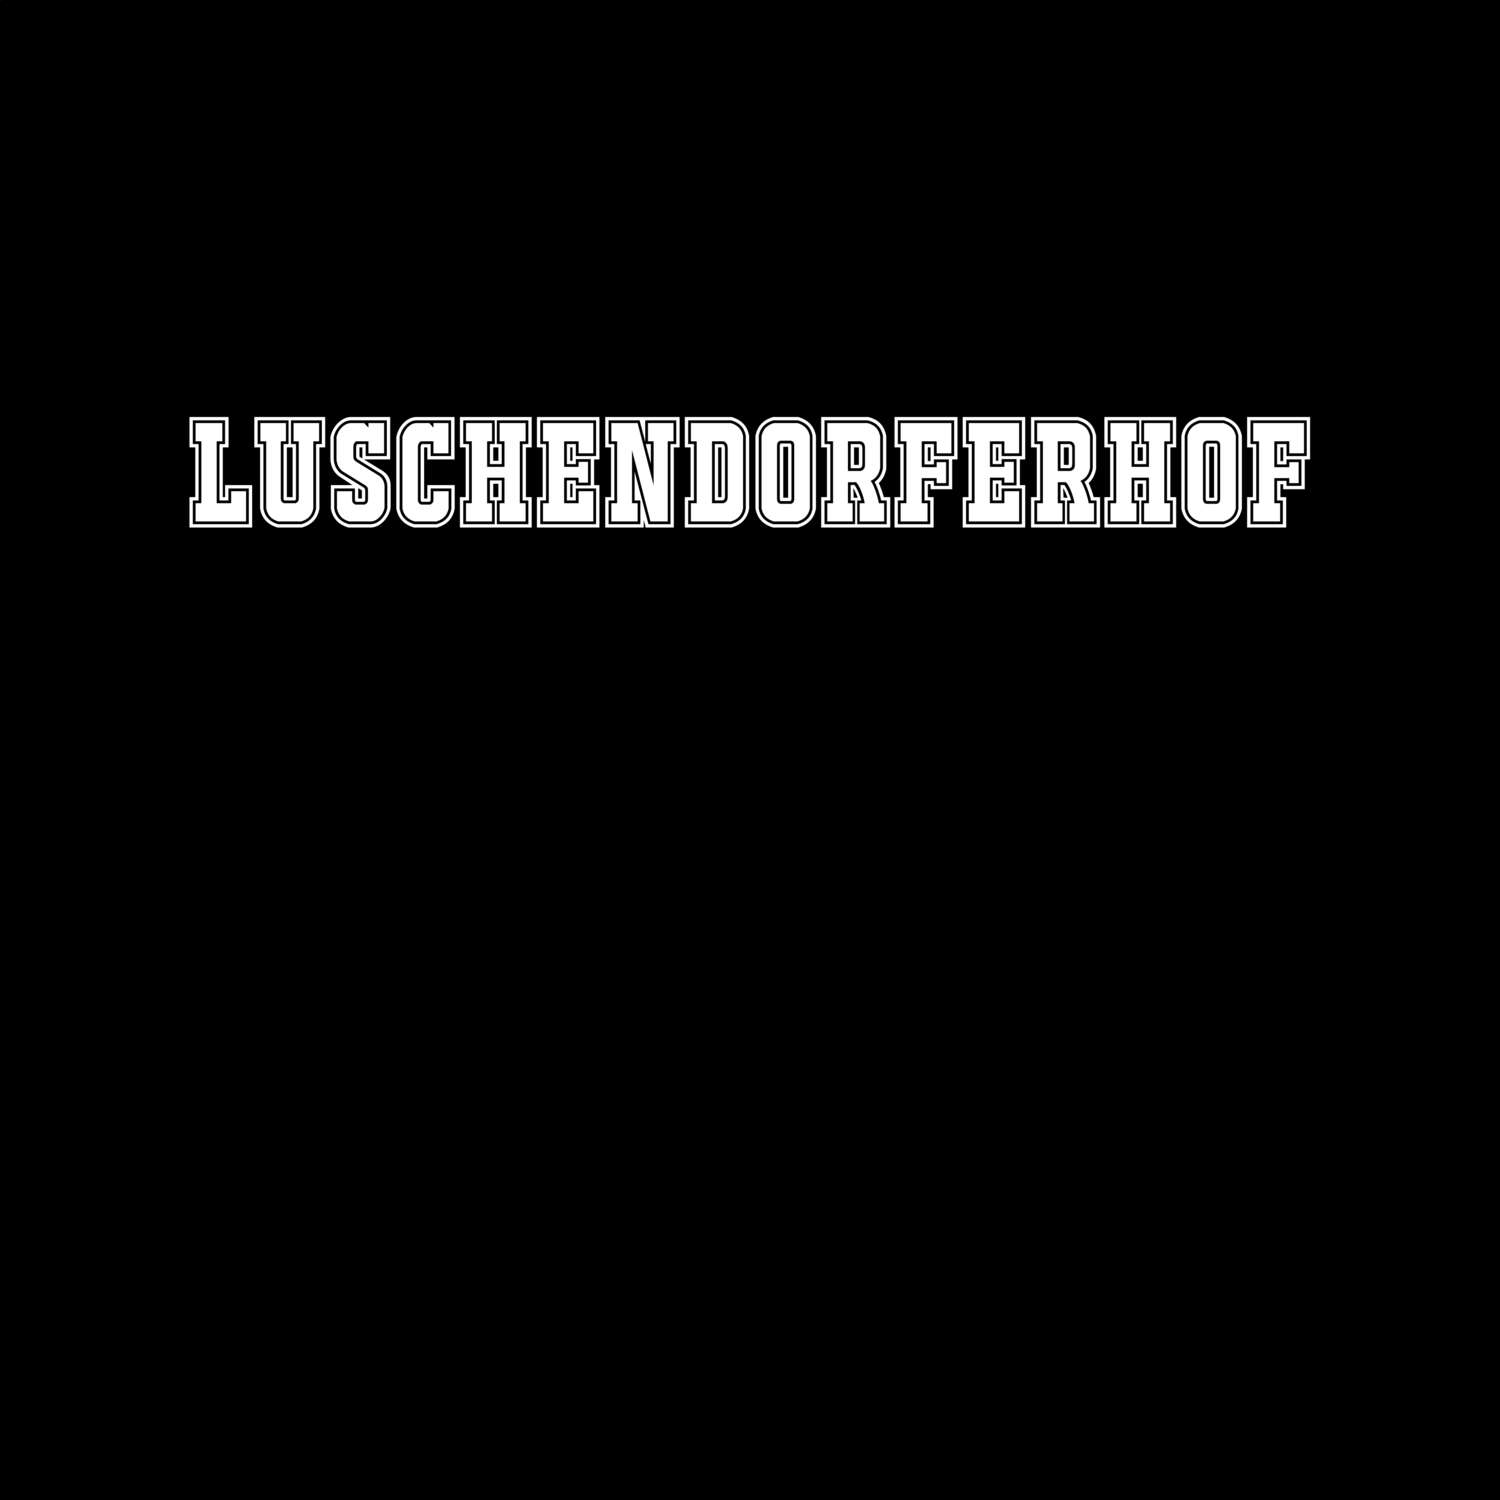 Luschendorferhof T-Shirt »Classic«